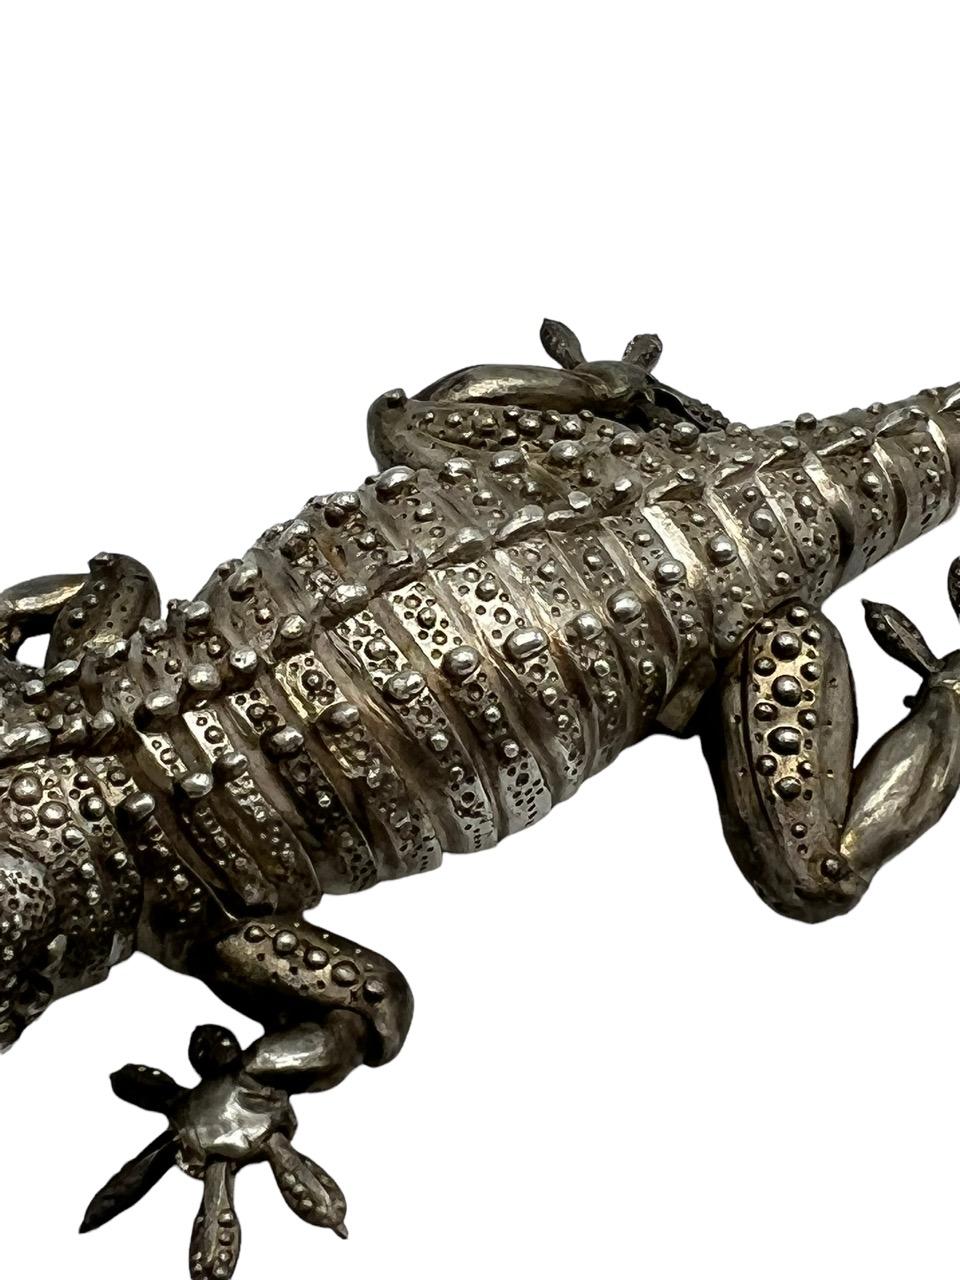 Contemporary Oleg Konstantinov Fully Articulated Gecko Made of Sterling Silver